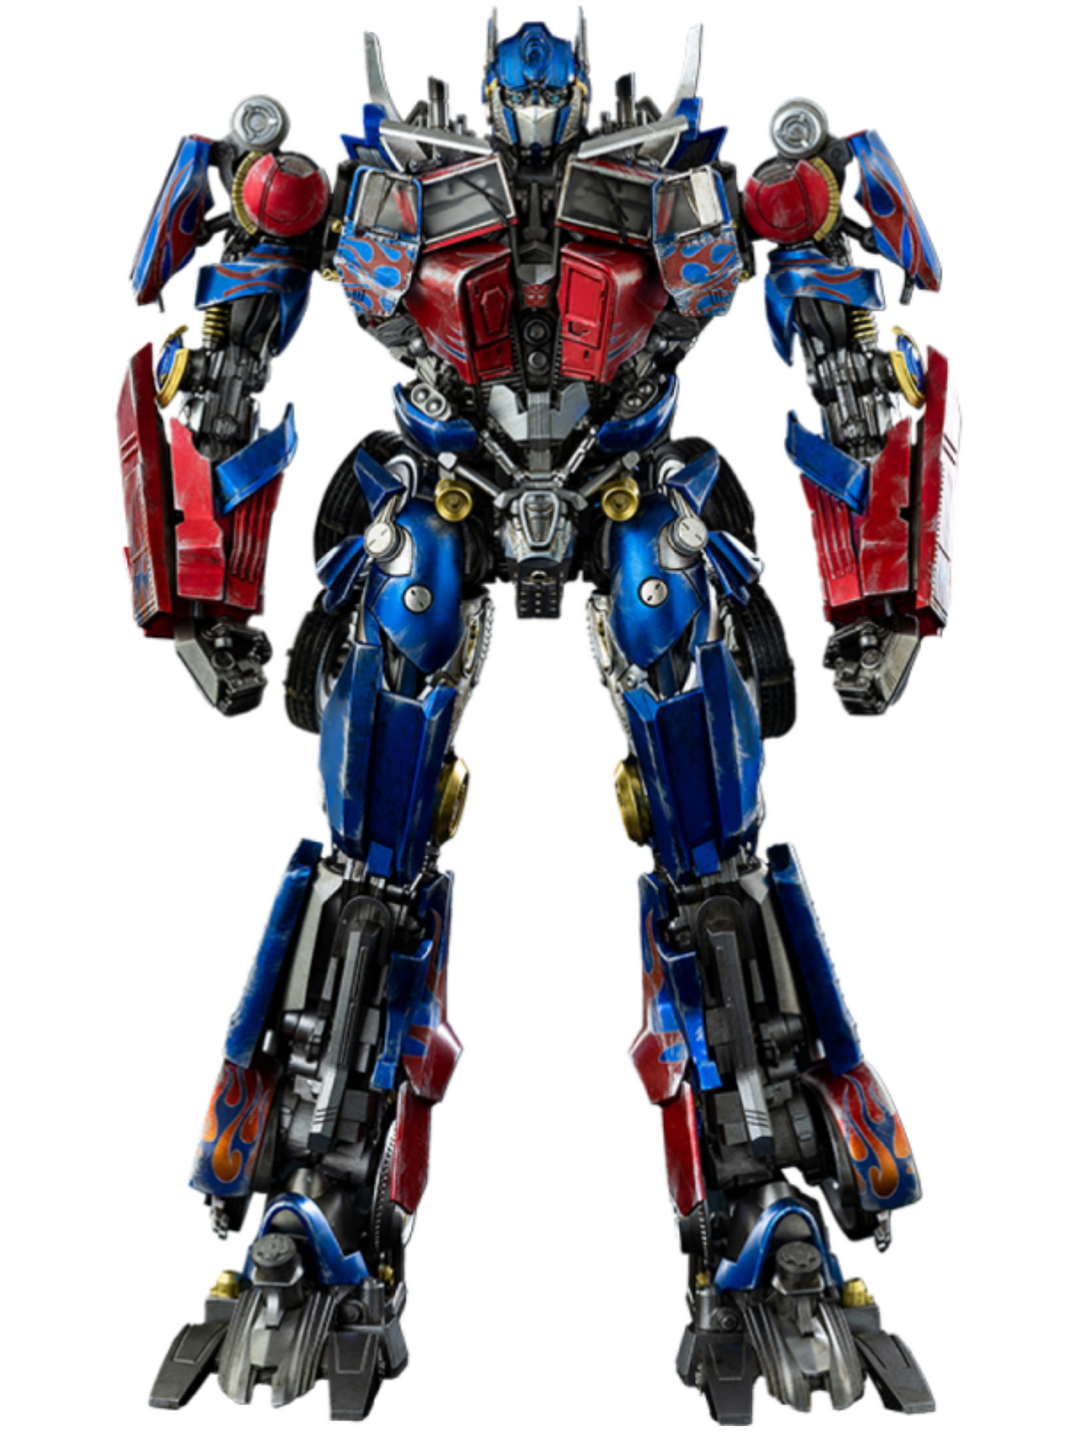 Transformers: Revenge of the Fallen DLX Action Figure 1:6 Scale Optimus Prime